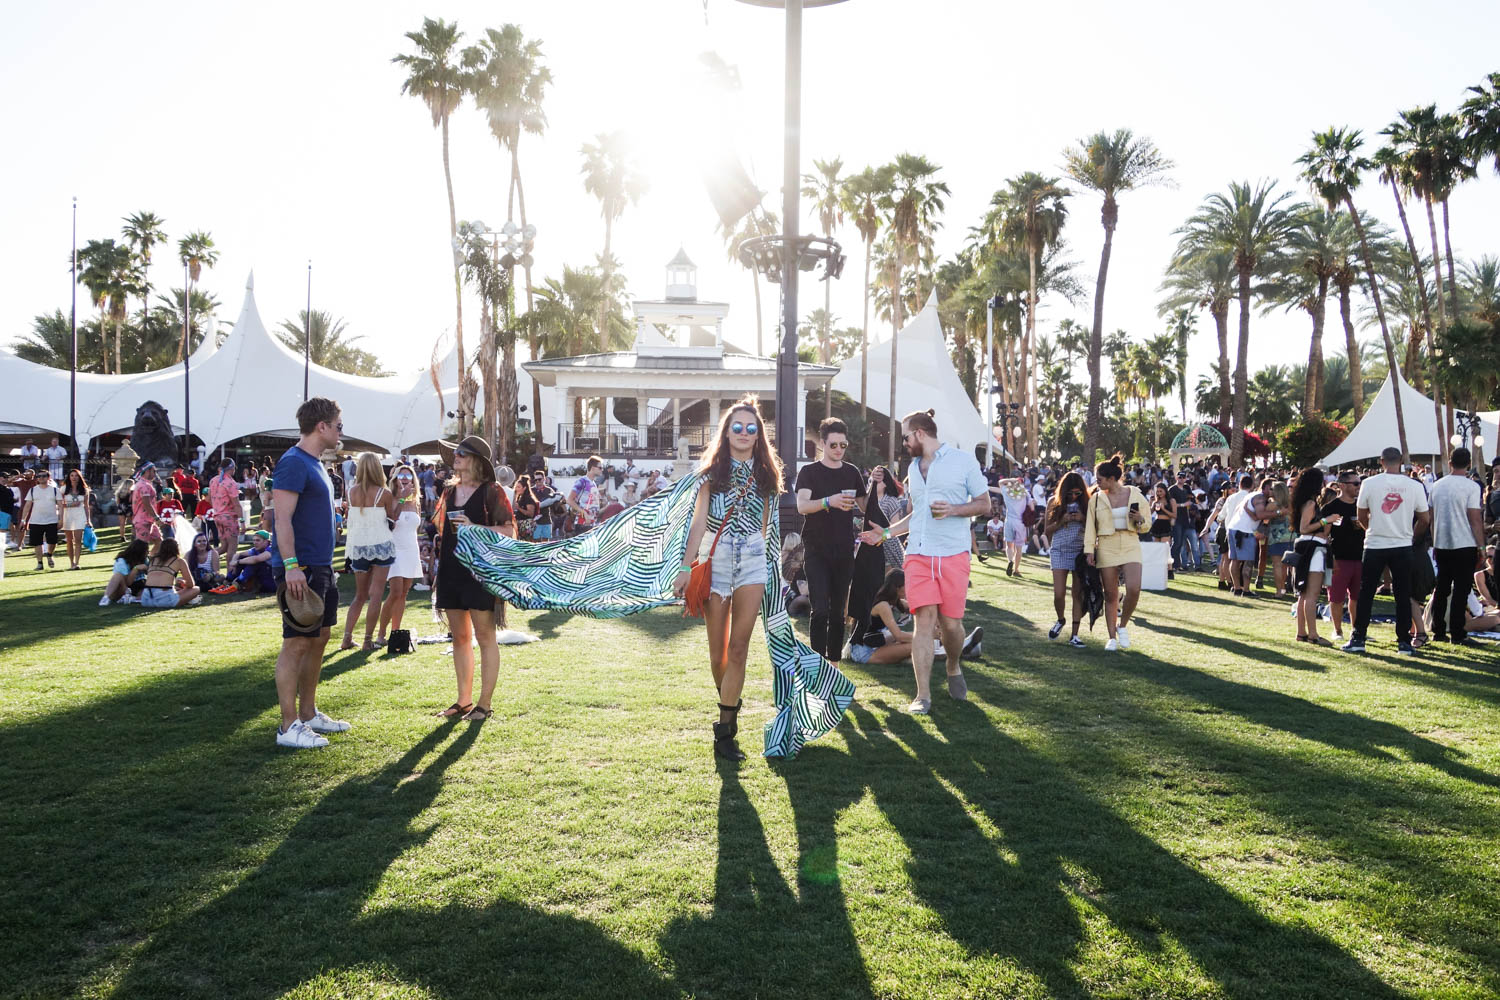 Coachella 2017 Weekend 1 festival fashion style seen on blogger model Xenia.Mz. Photos by Samuel Black